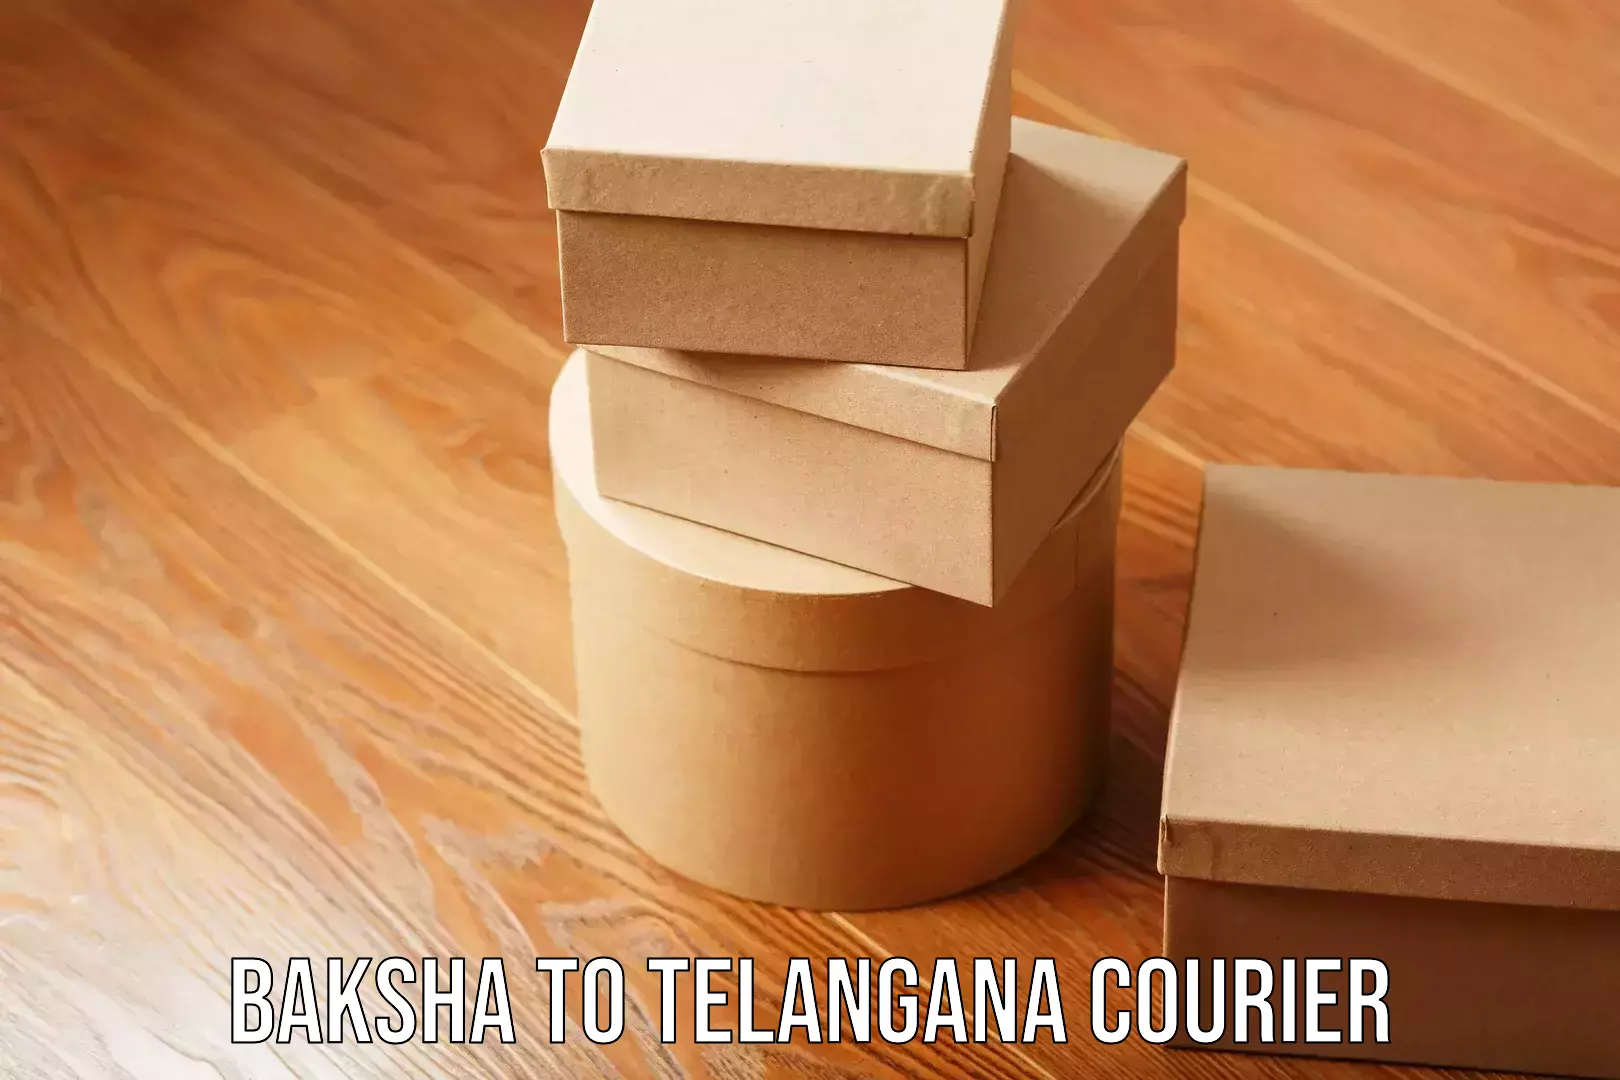 Supply chain efficiency Baksha to Telangana